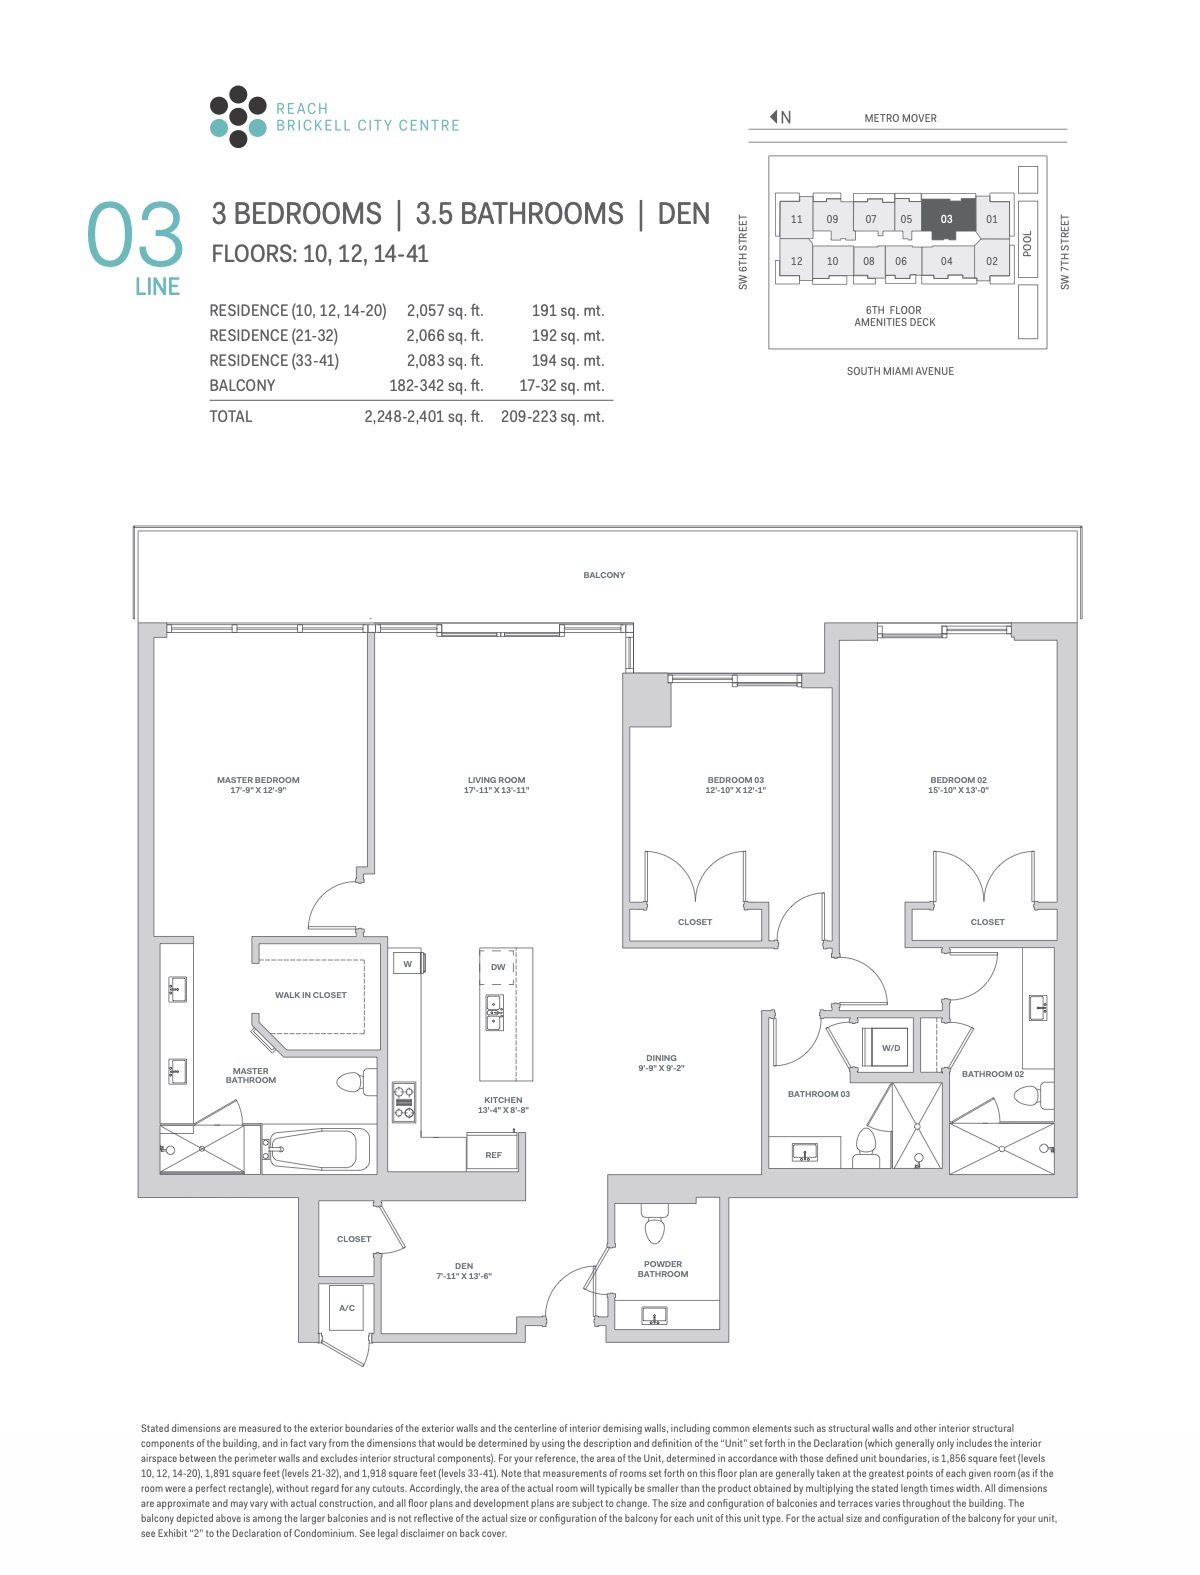 Floor Plan for Reach Brickell City Centre, Line 03